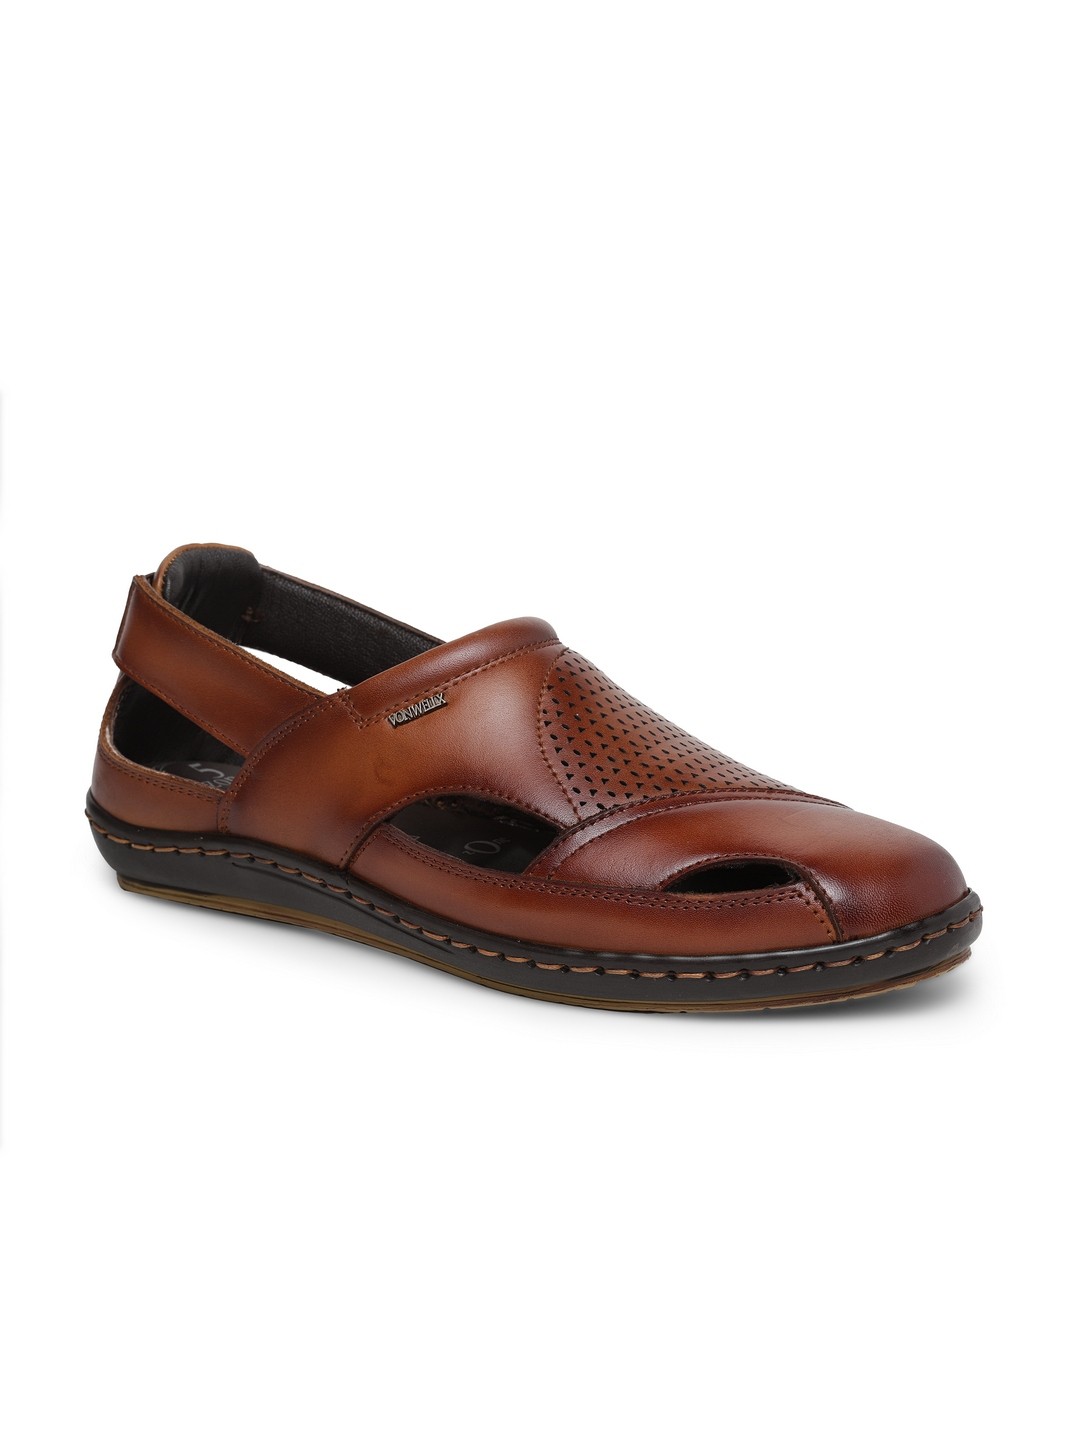 Buy Von Wellx Germany Comfort Men's Tan Sandal Eddie Online in Colombo